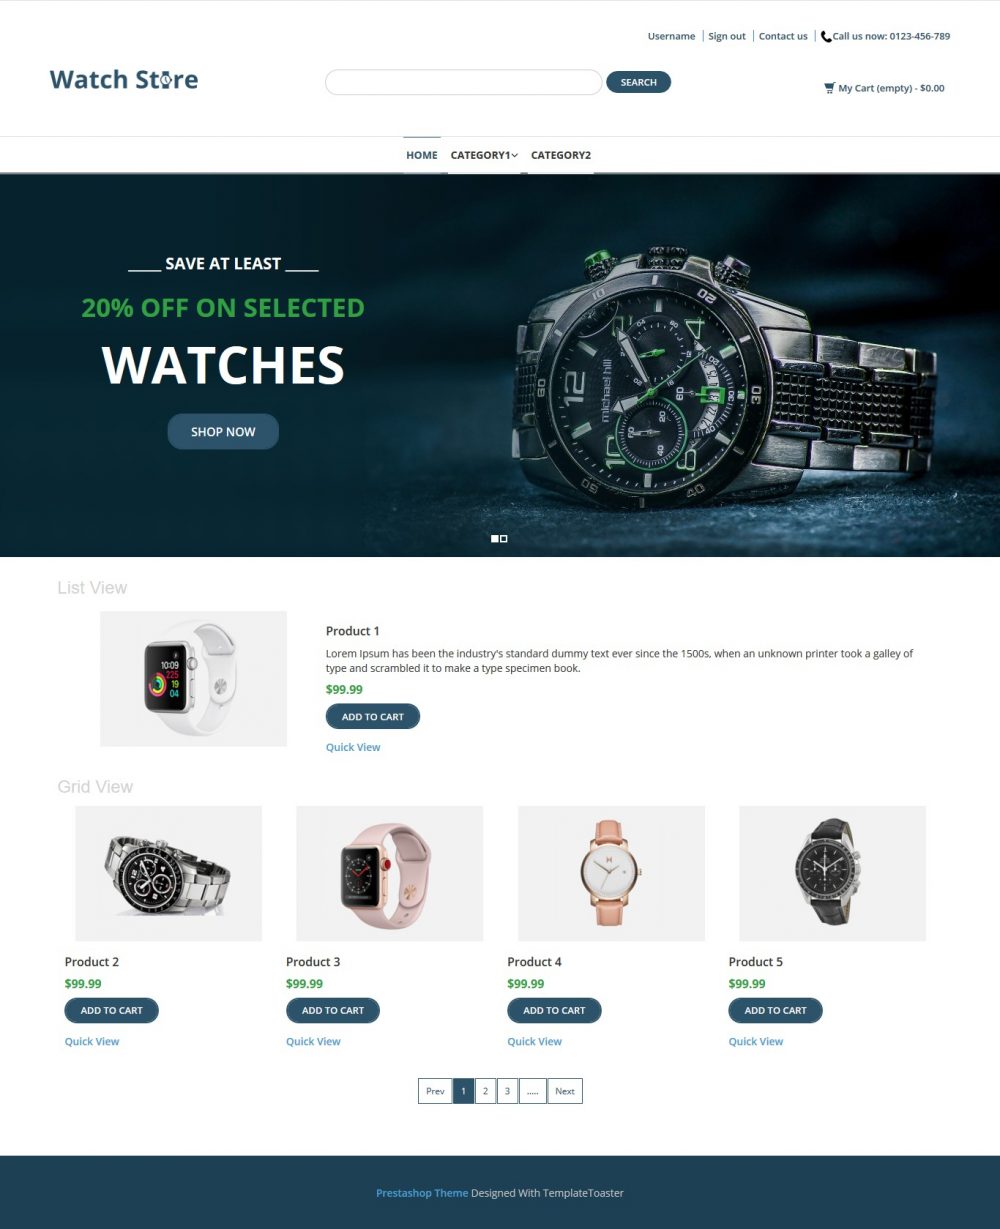 Watch Store - Watch Shop PrestaShop Theme